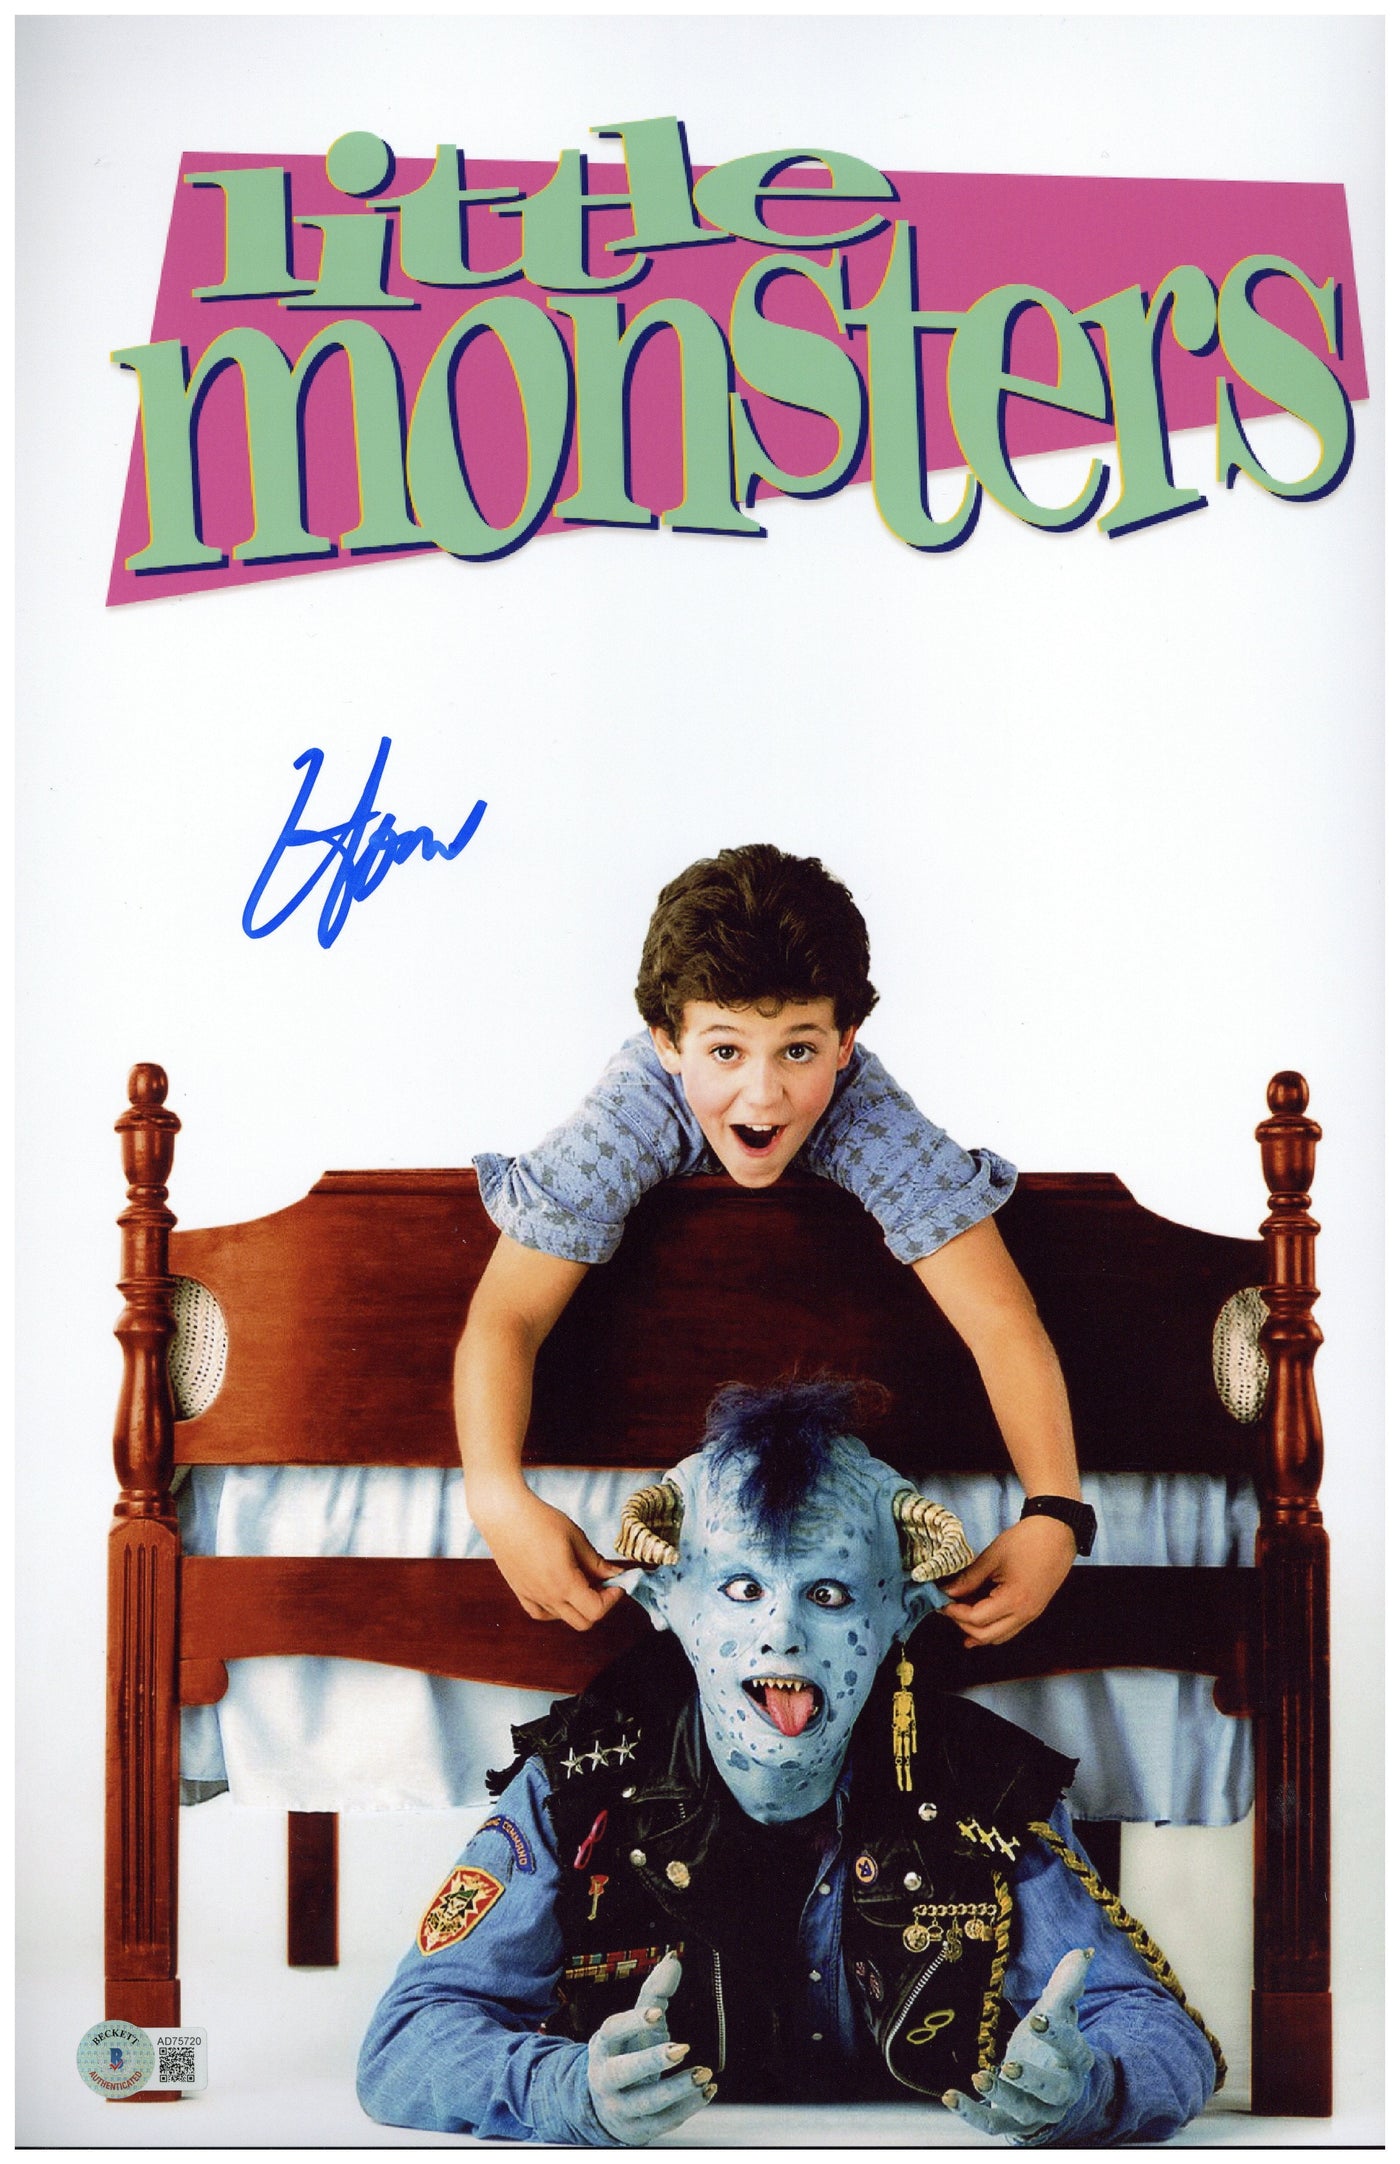 Howie Mandel Signed 11x17 Photo Little Monsters Autographed BAS COA